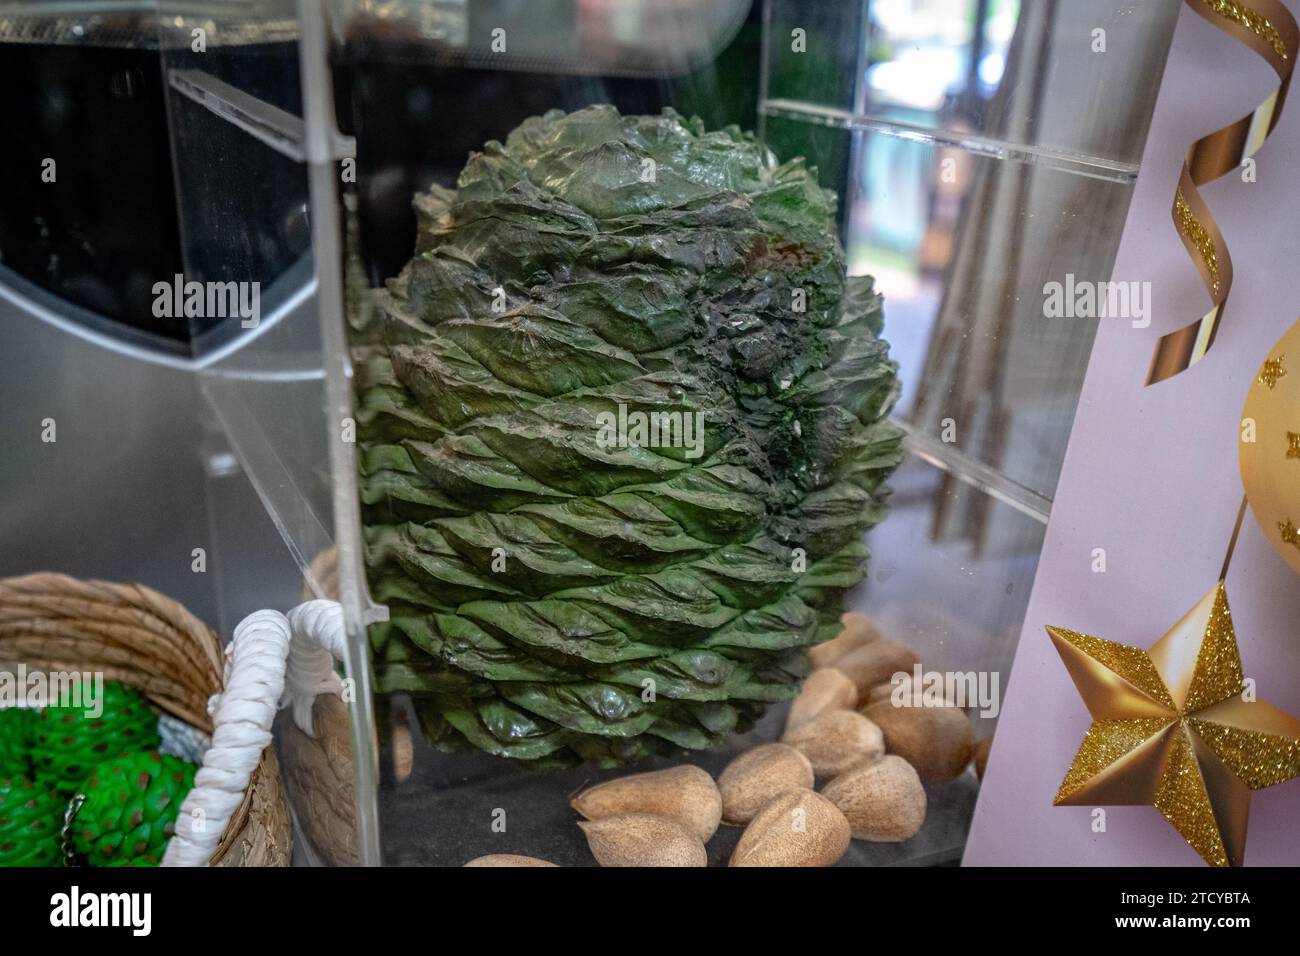 Giant Bunya pine tree cone replica Stock Photo